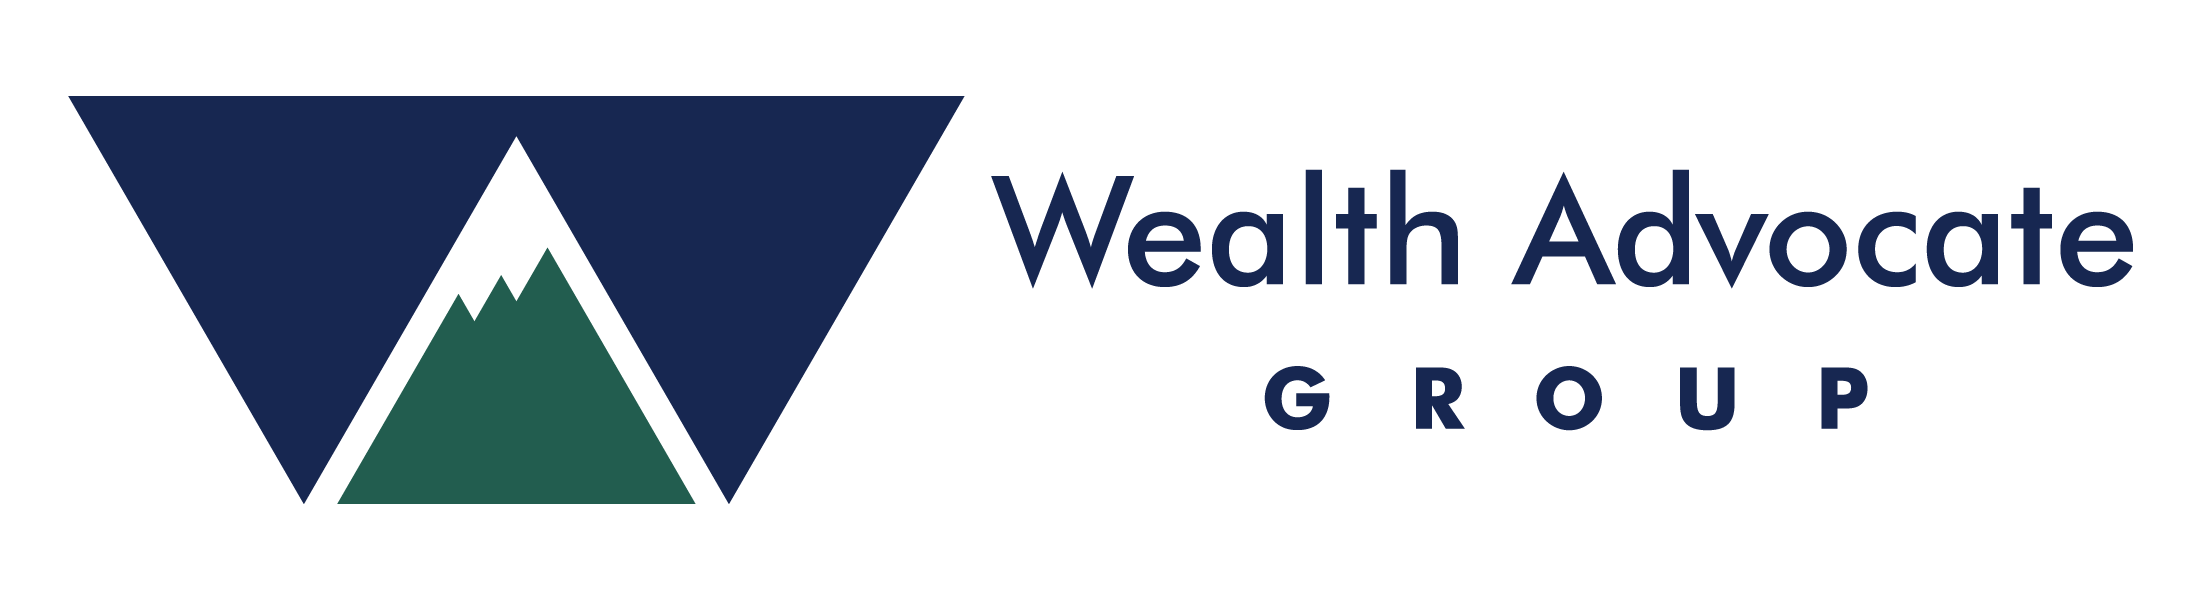 WAG full logo horizontal